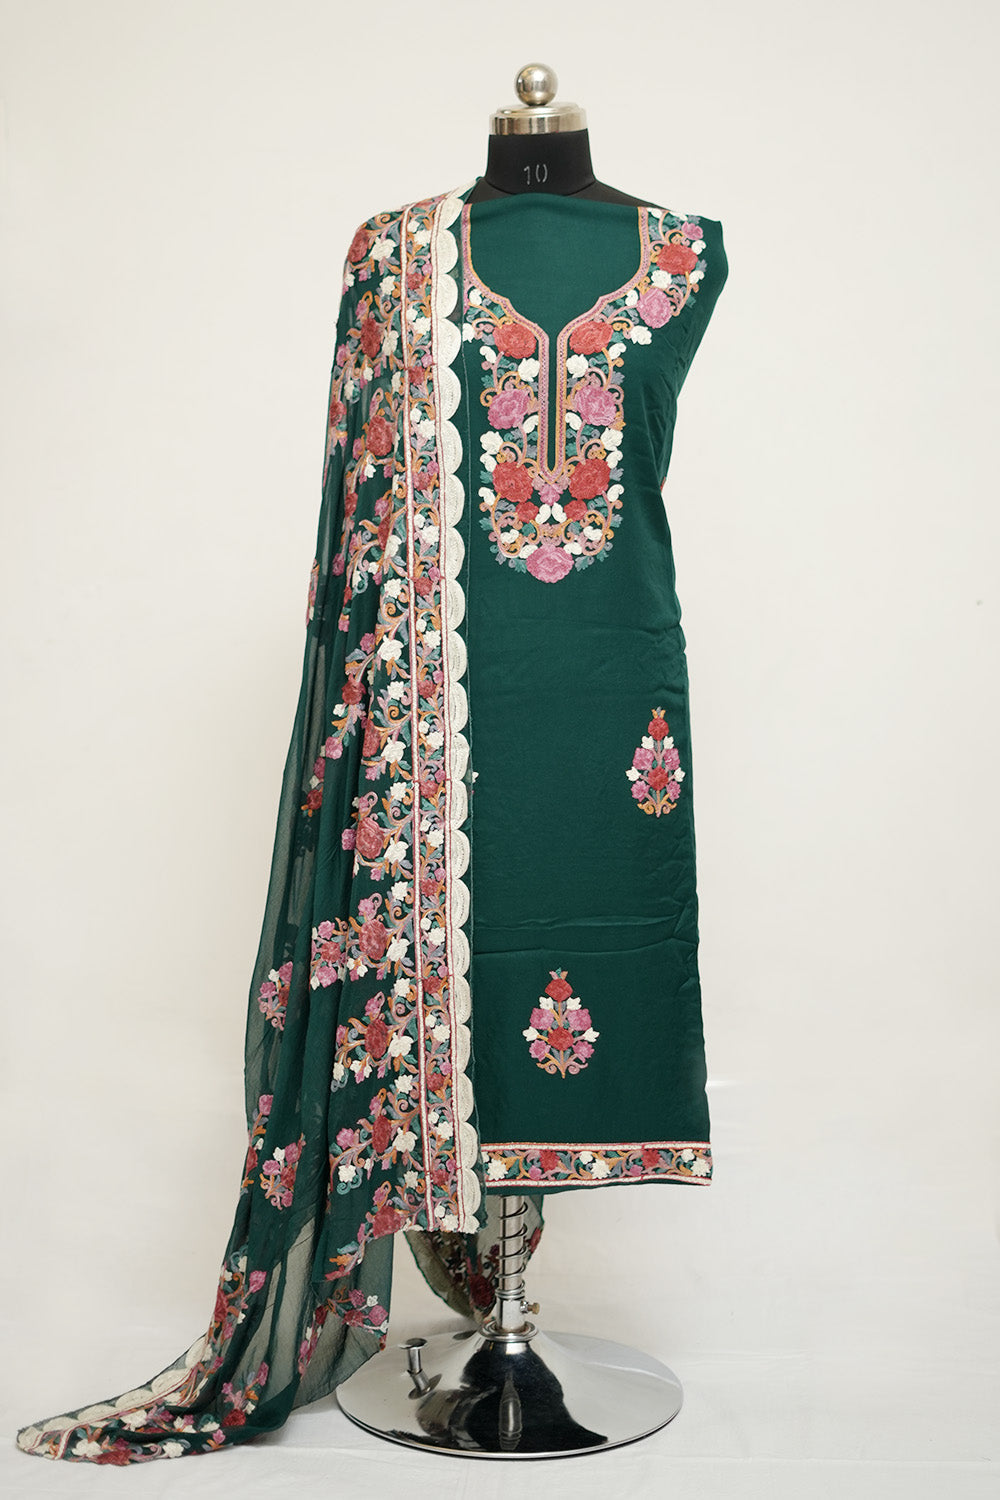 Green Colour Aari Work Salwar Kameez With Neckline Pattern